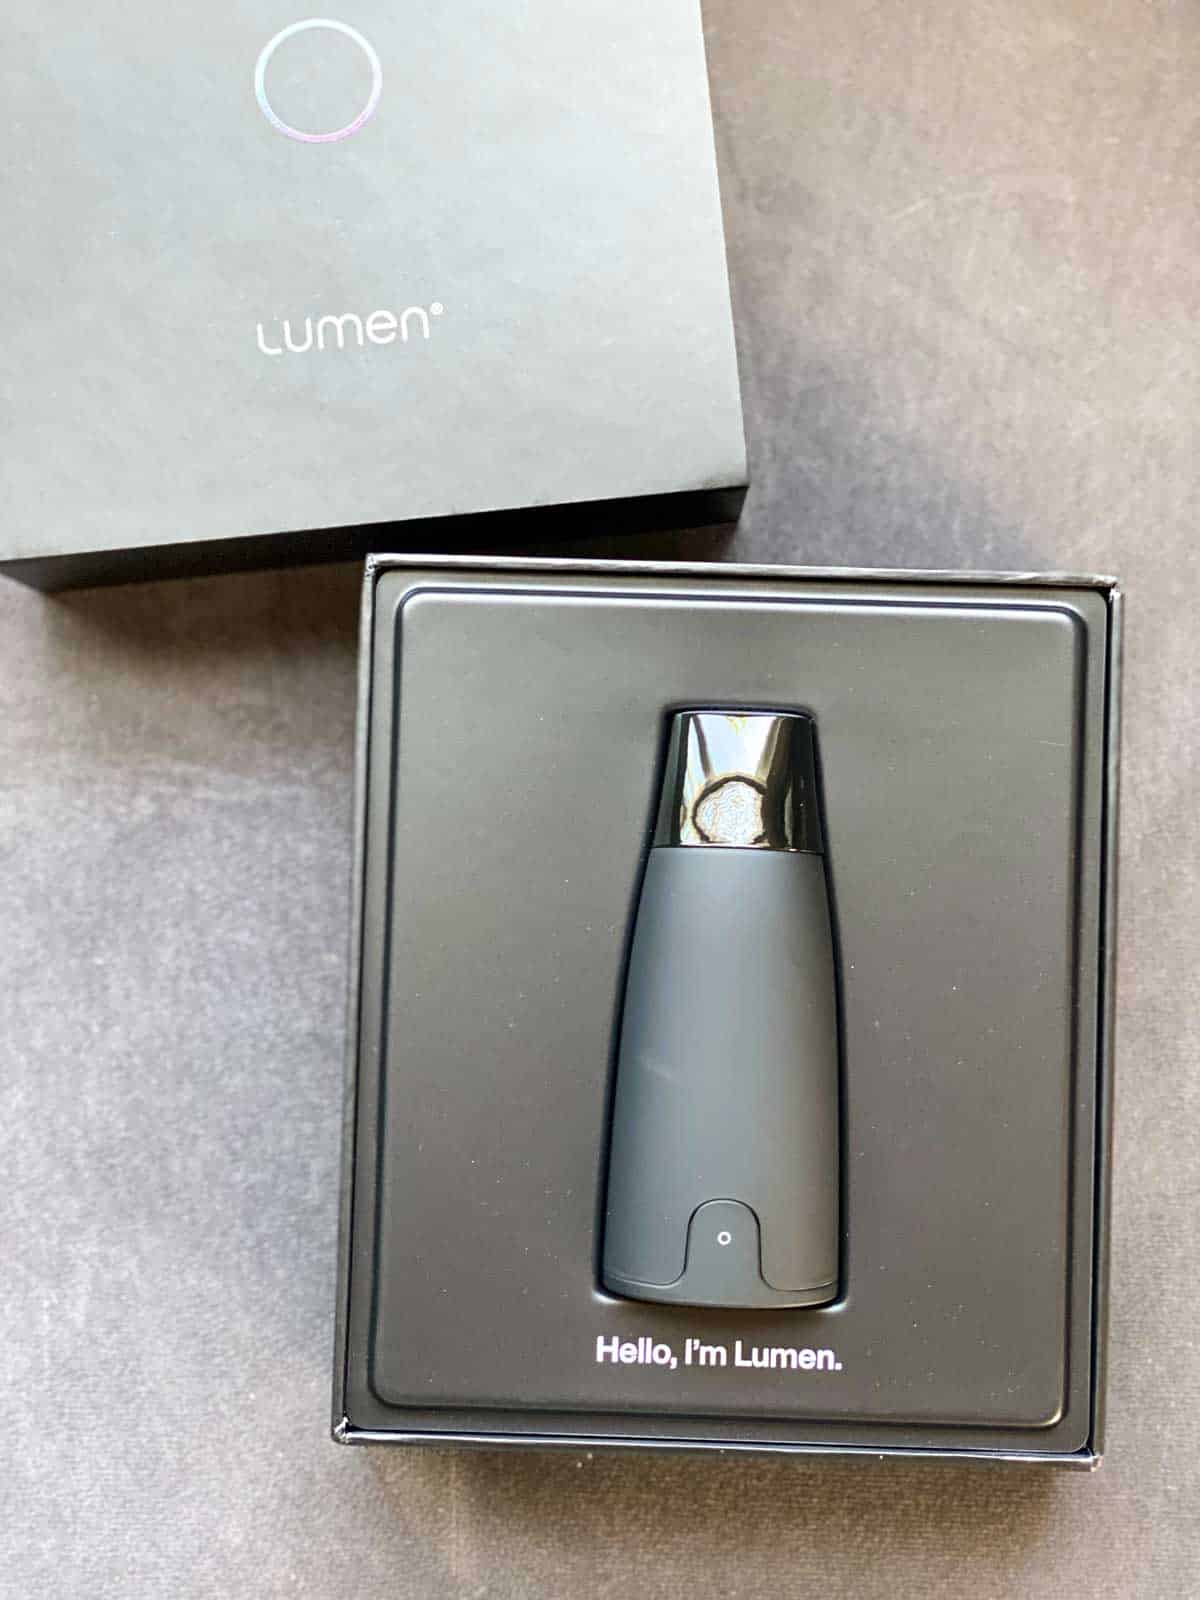 Lumen Review: Does This Handheld Metabolism Tracker Work? – SPY